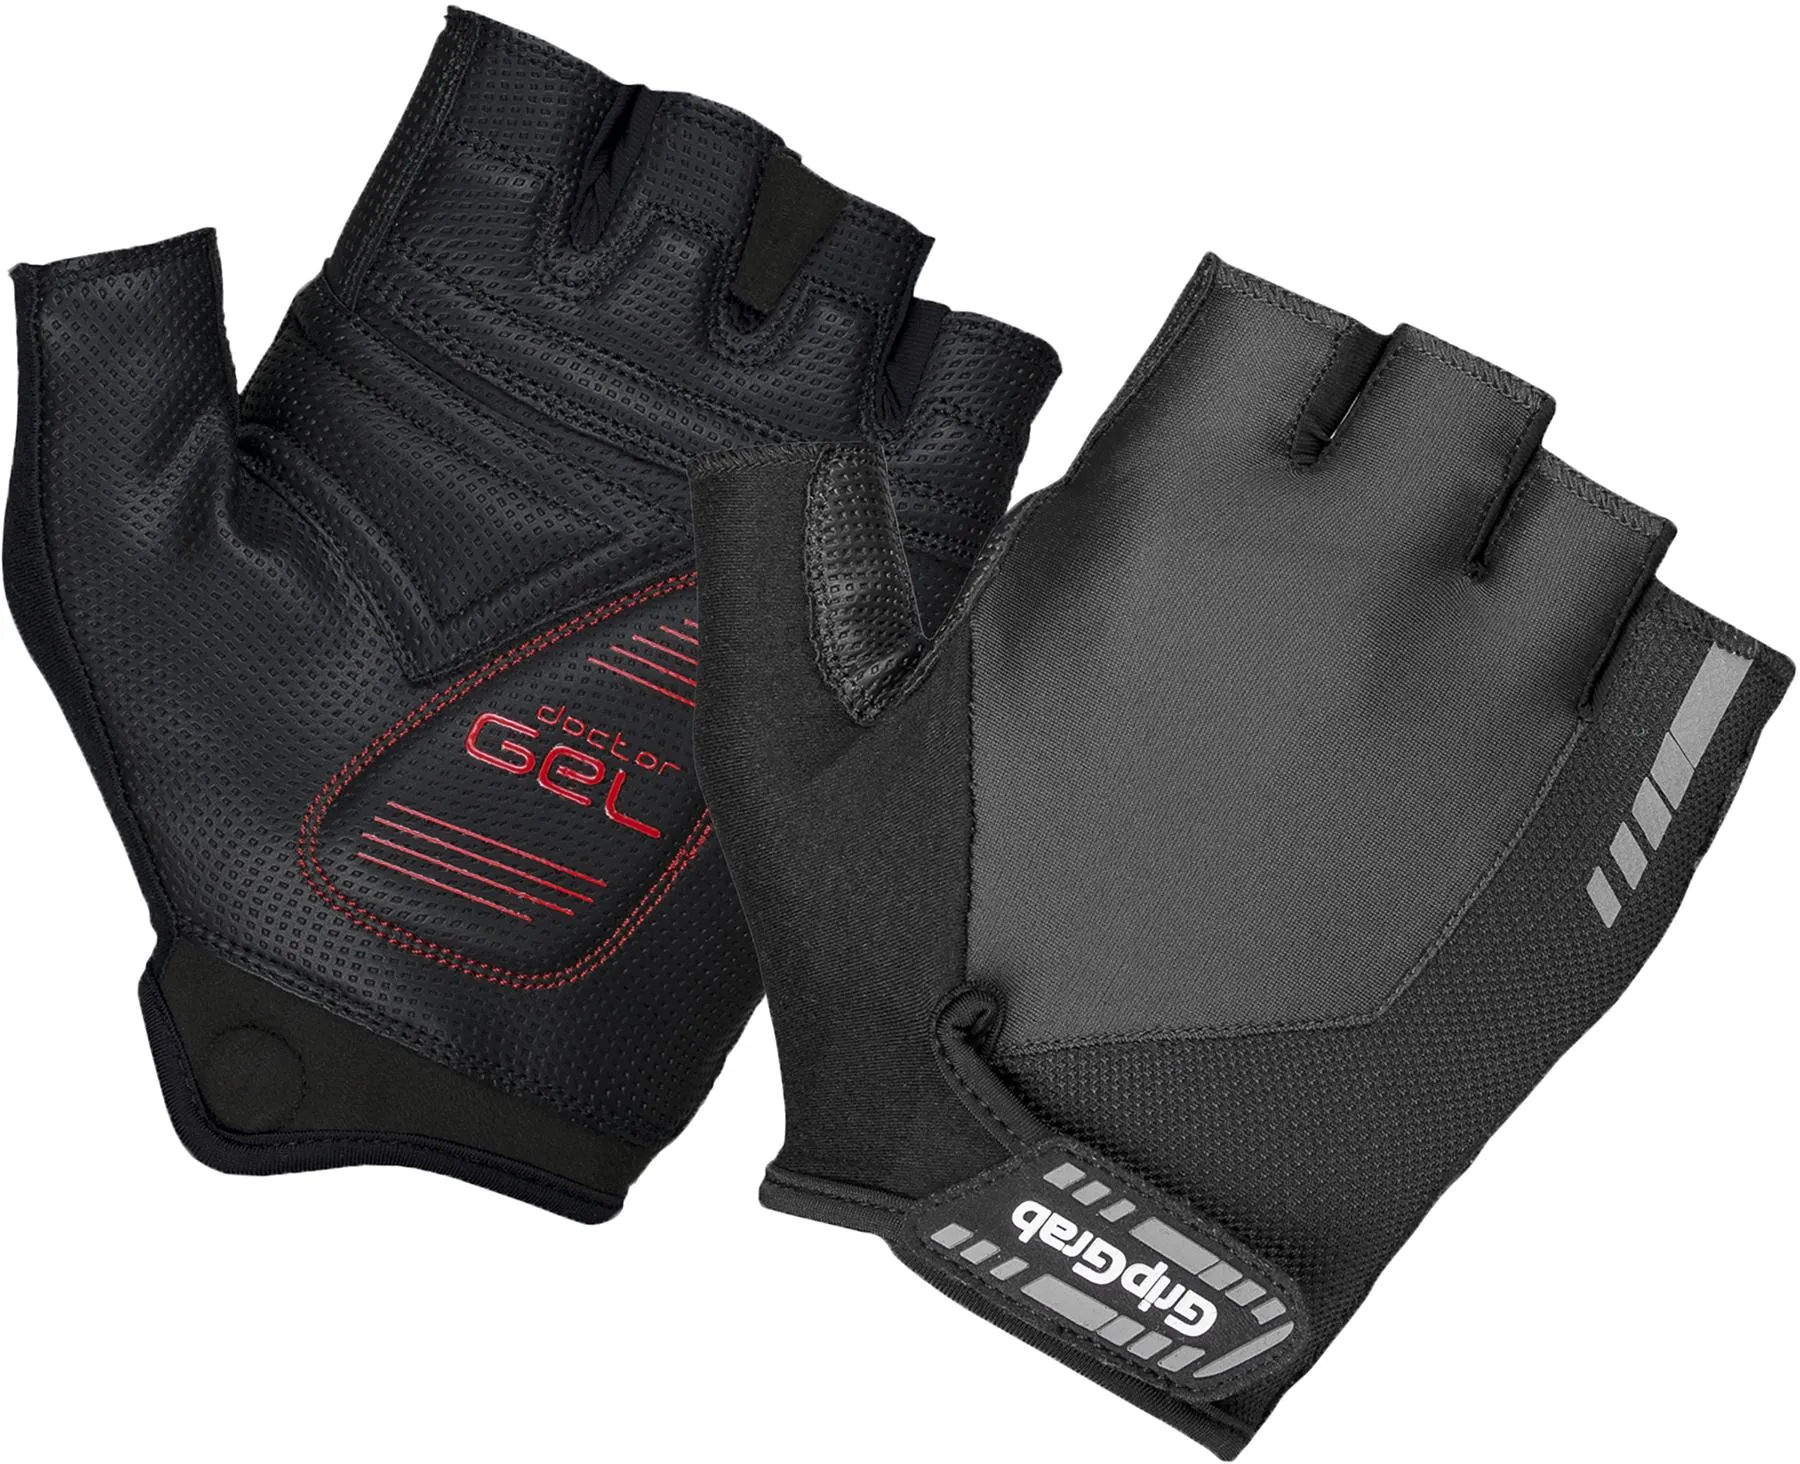  ProGel Padded Glove, Black